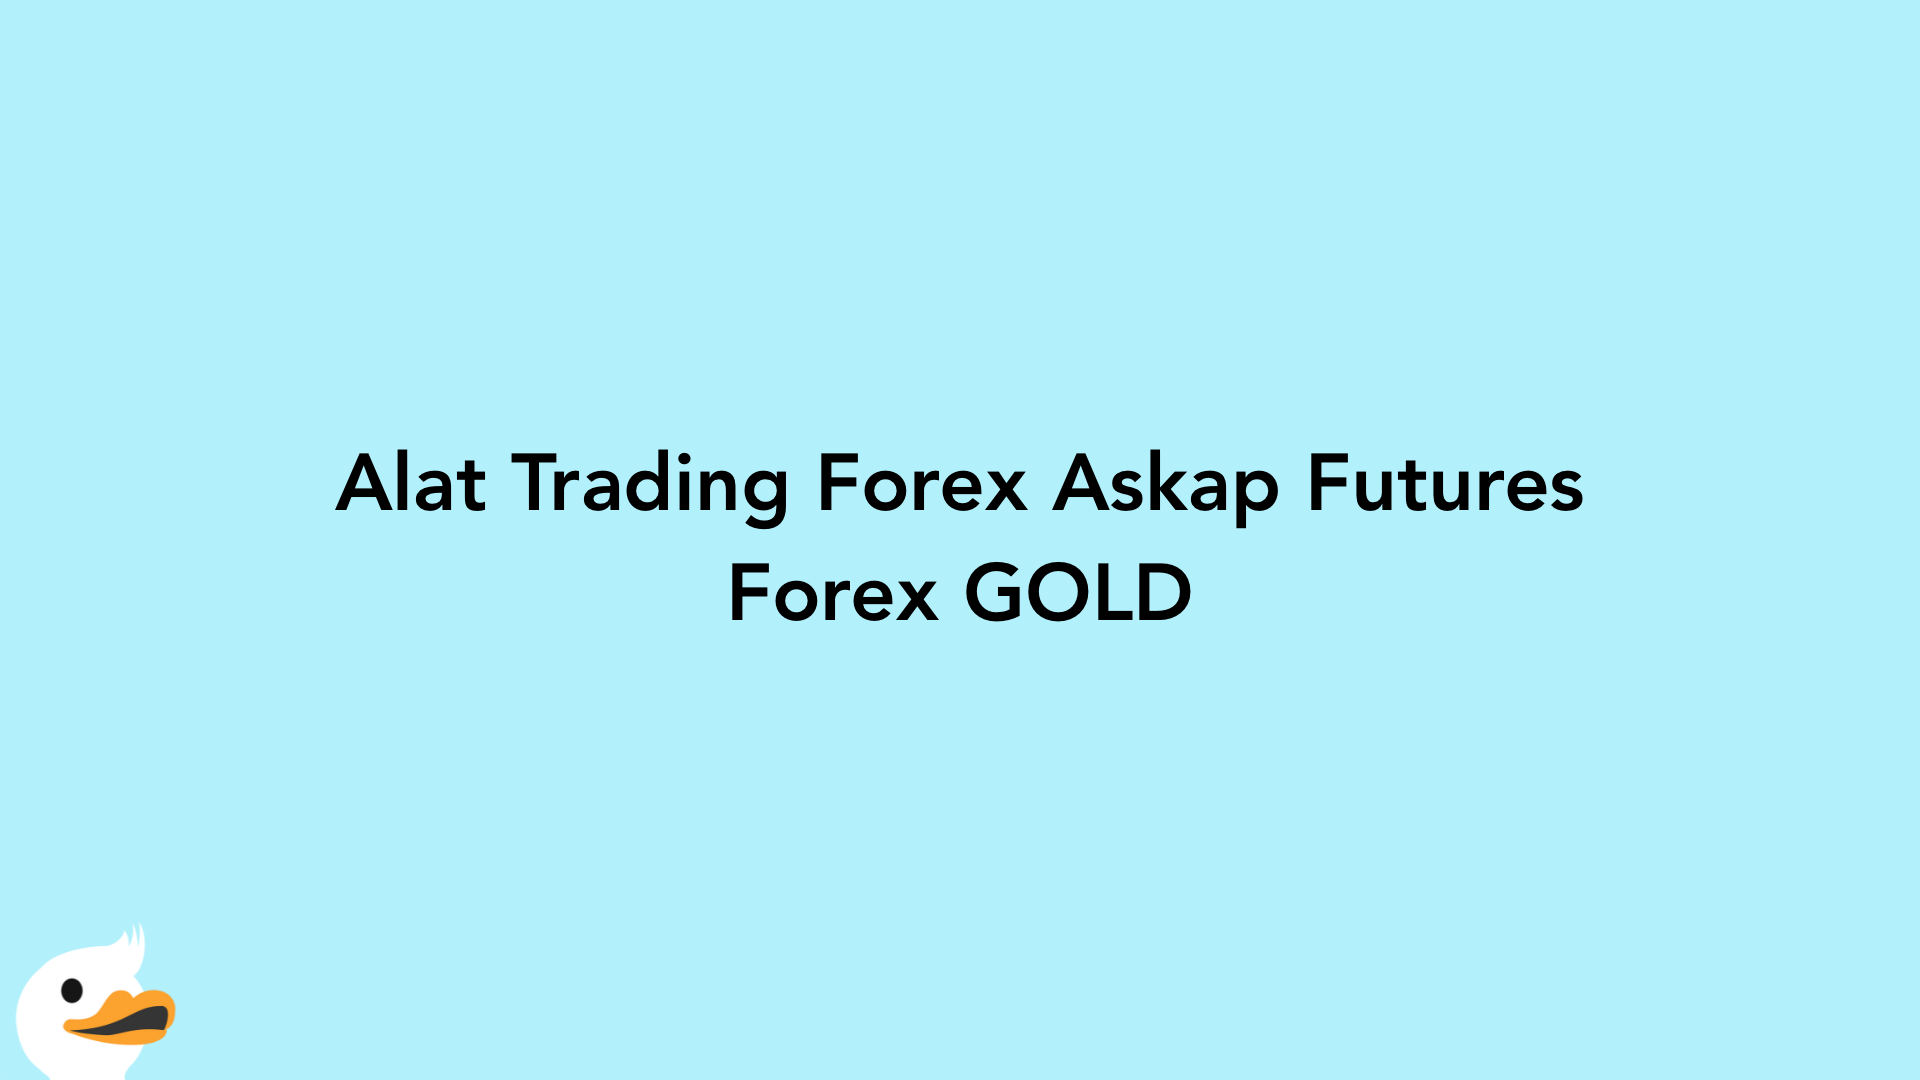 Alat Trading Forex Askap Futures Forex GOLD